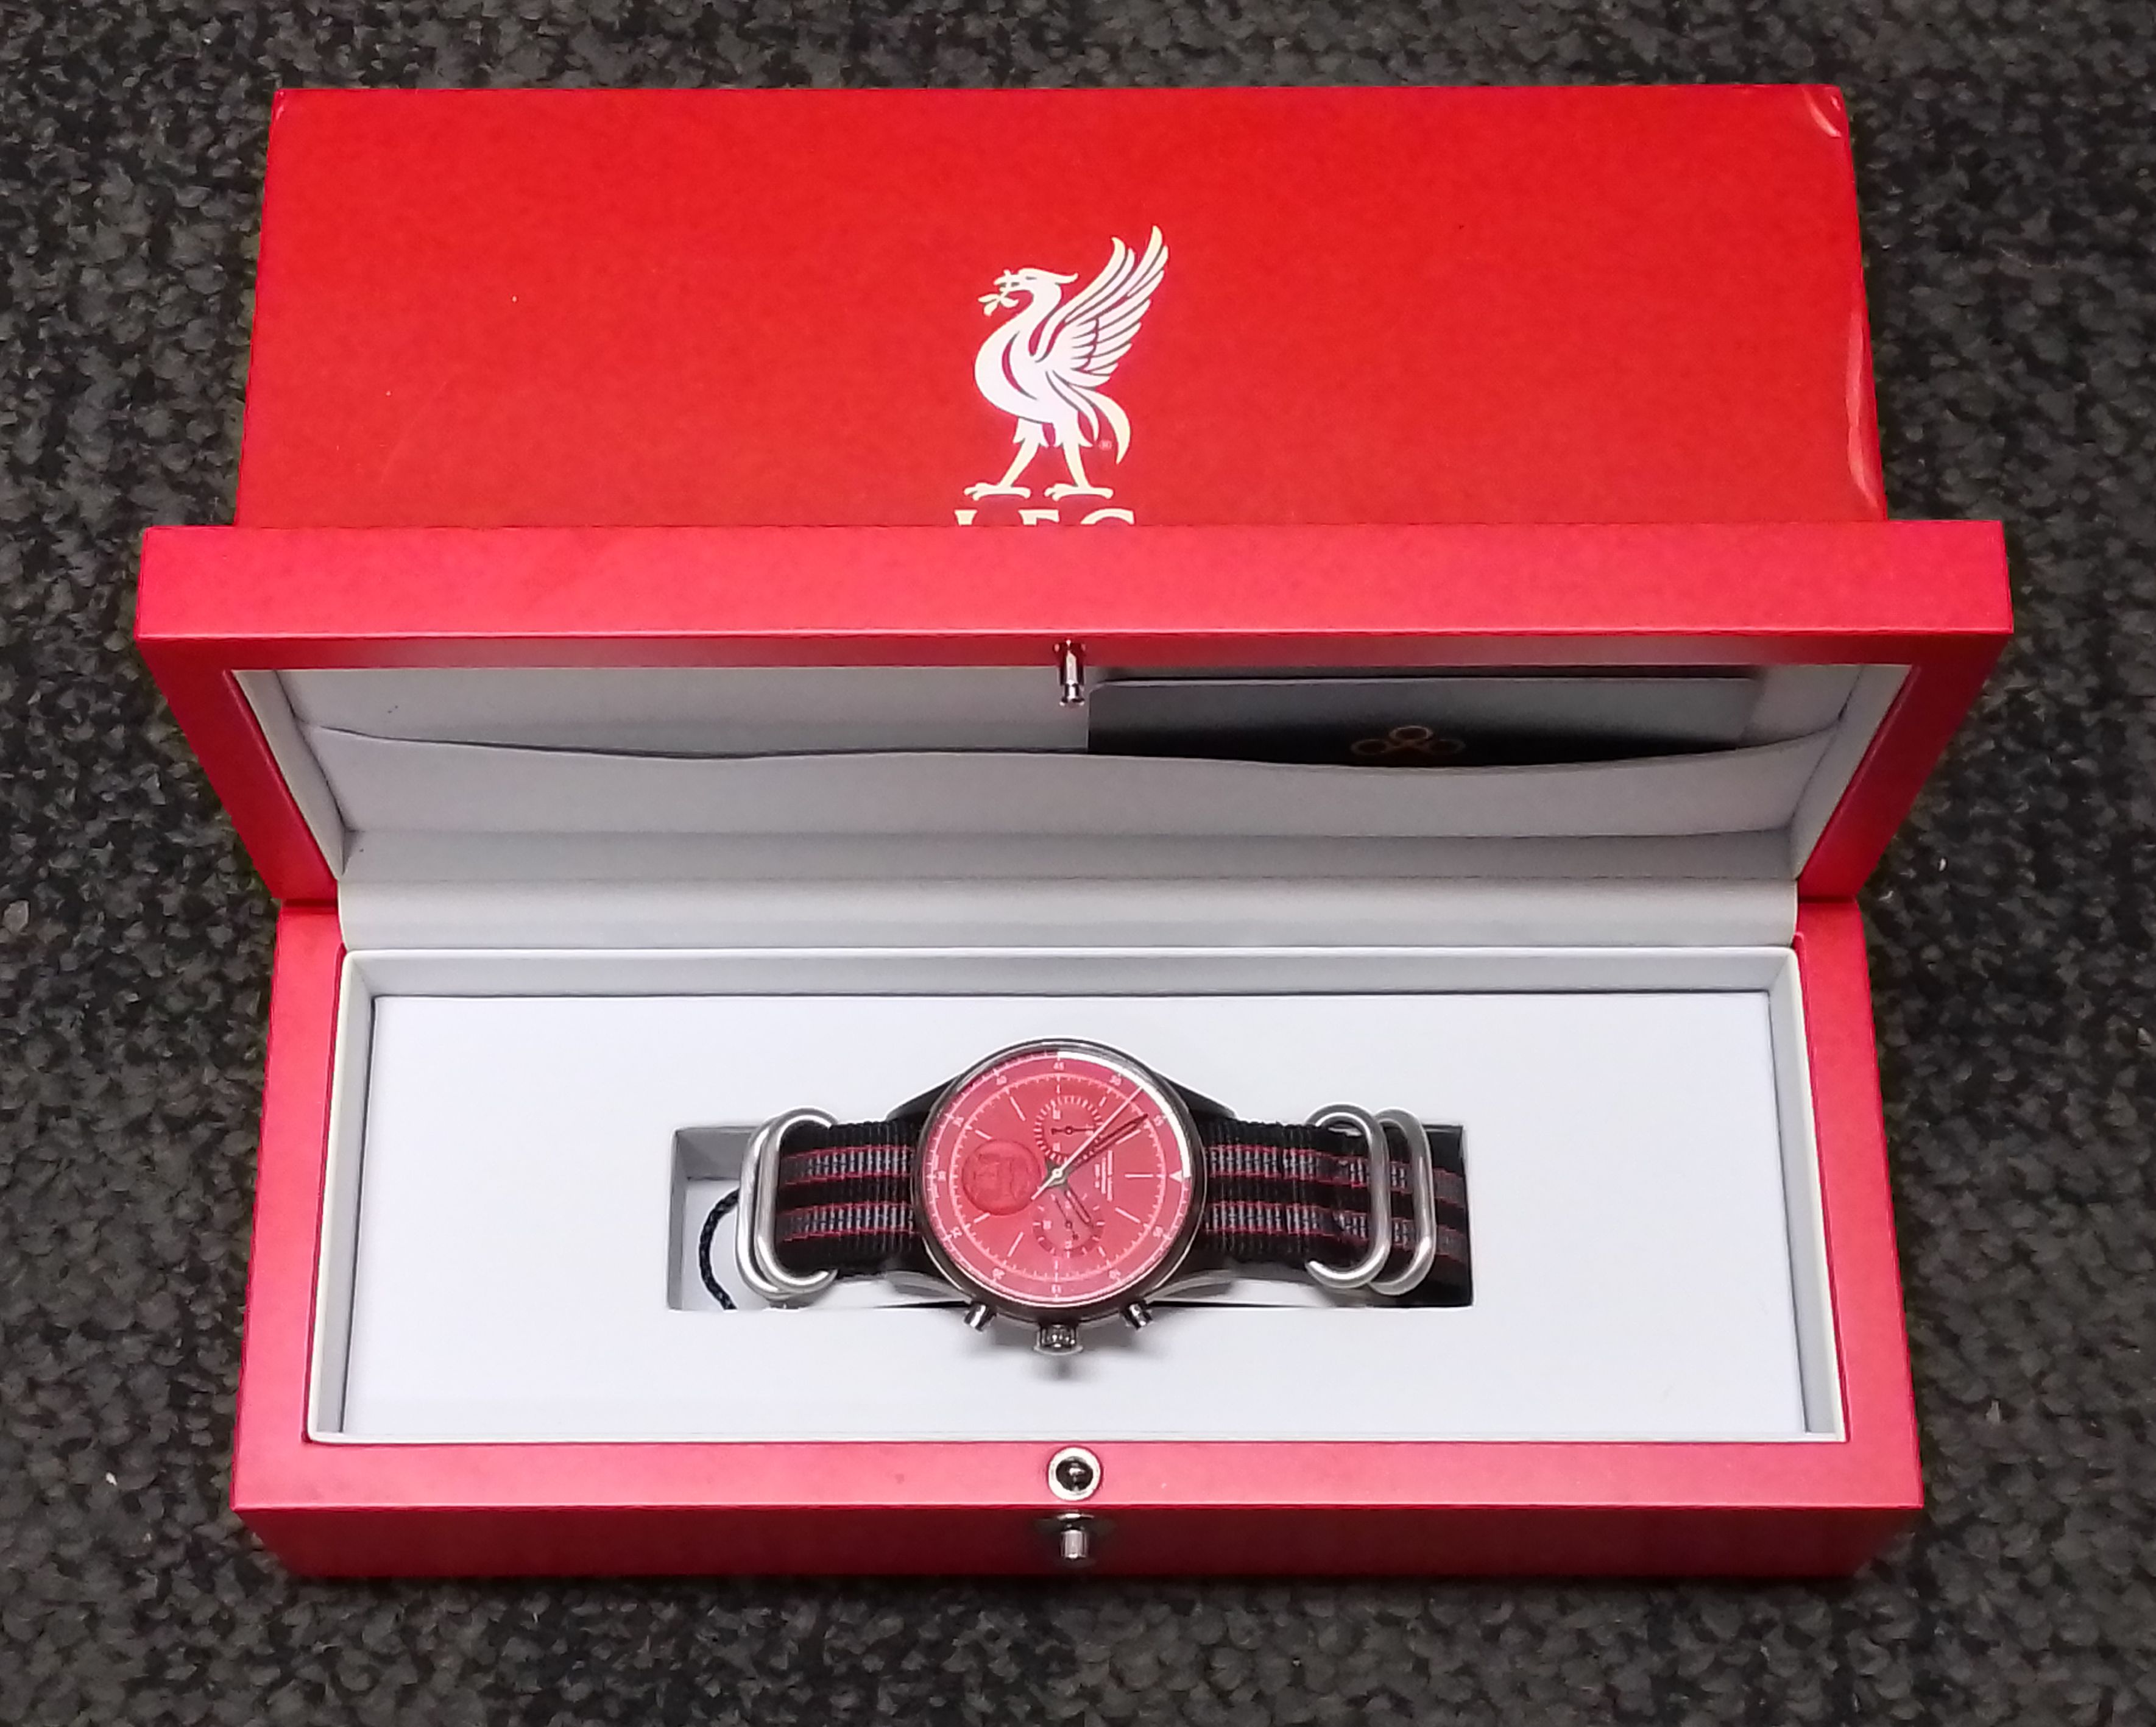 A Tribus Liverpool FC Premier League Champions 2019/20 wristwatch, with box.